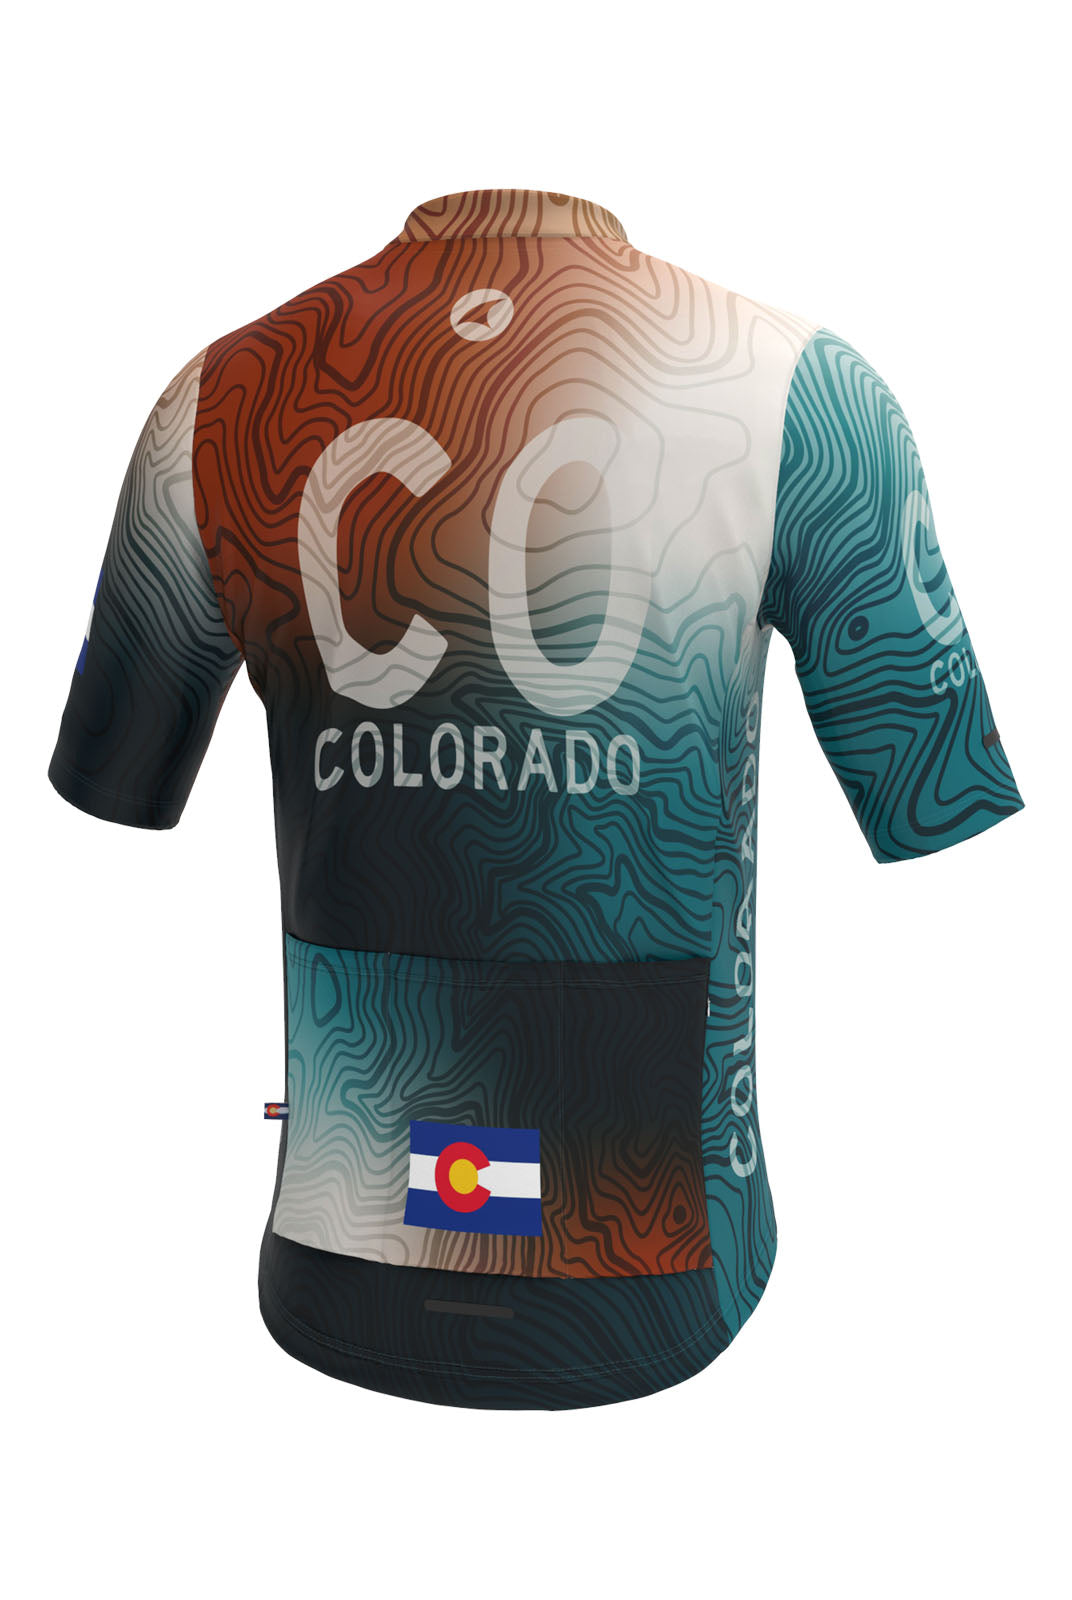 Men's Colorado Geo Bike Jersey - Back View